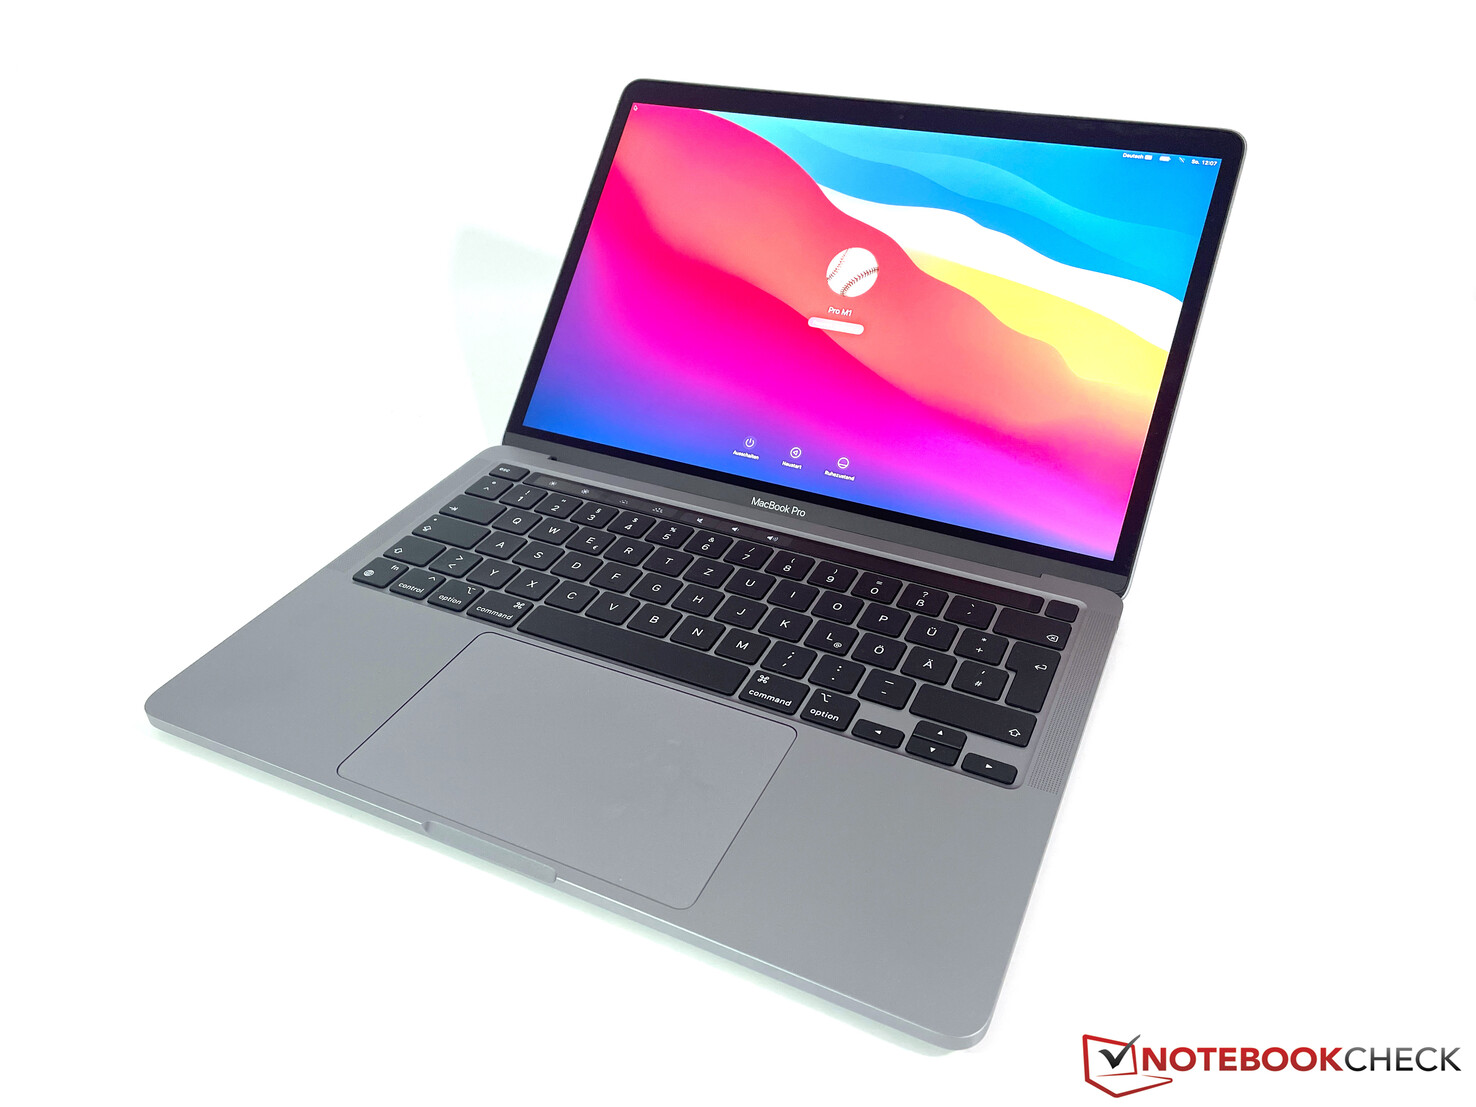 Korst Naar behoren Kauwgom 13.3-inch Apple MacBook Pro with M1 chip gets a massive 28% discount on B&H  Photo - NotebookCheck.net News